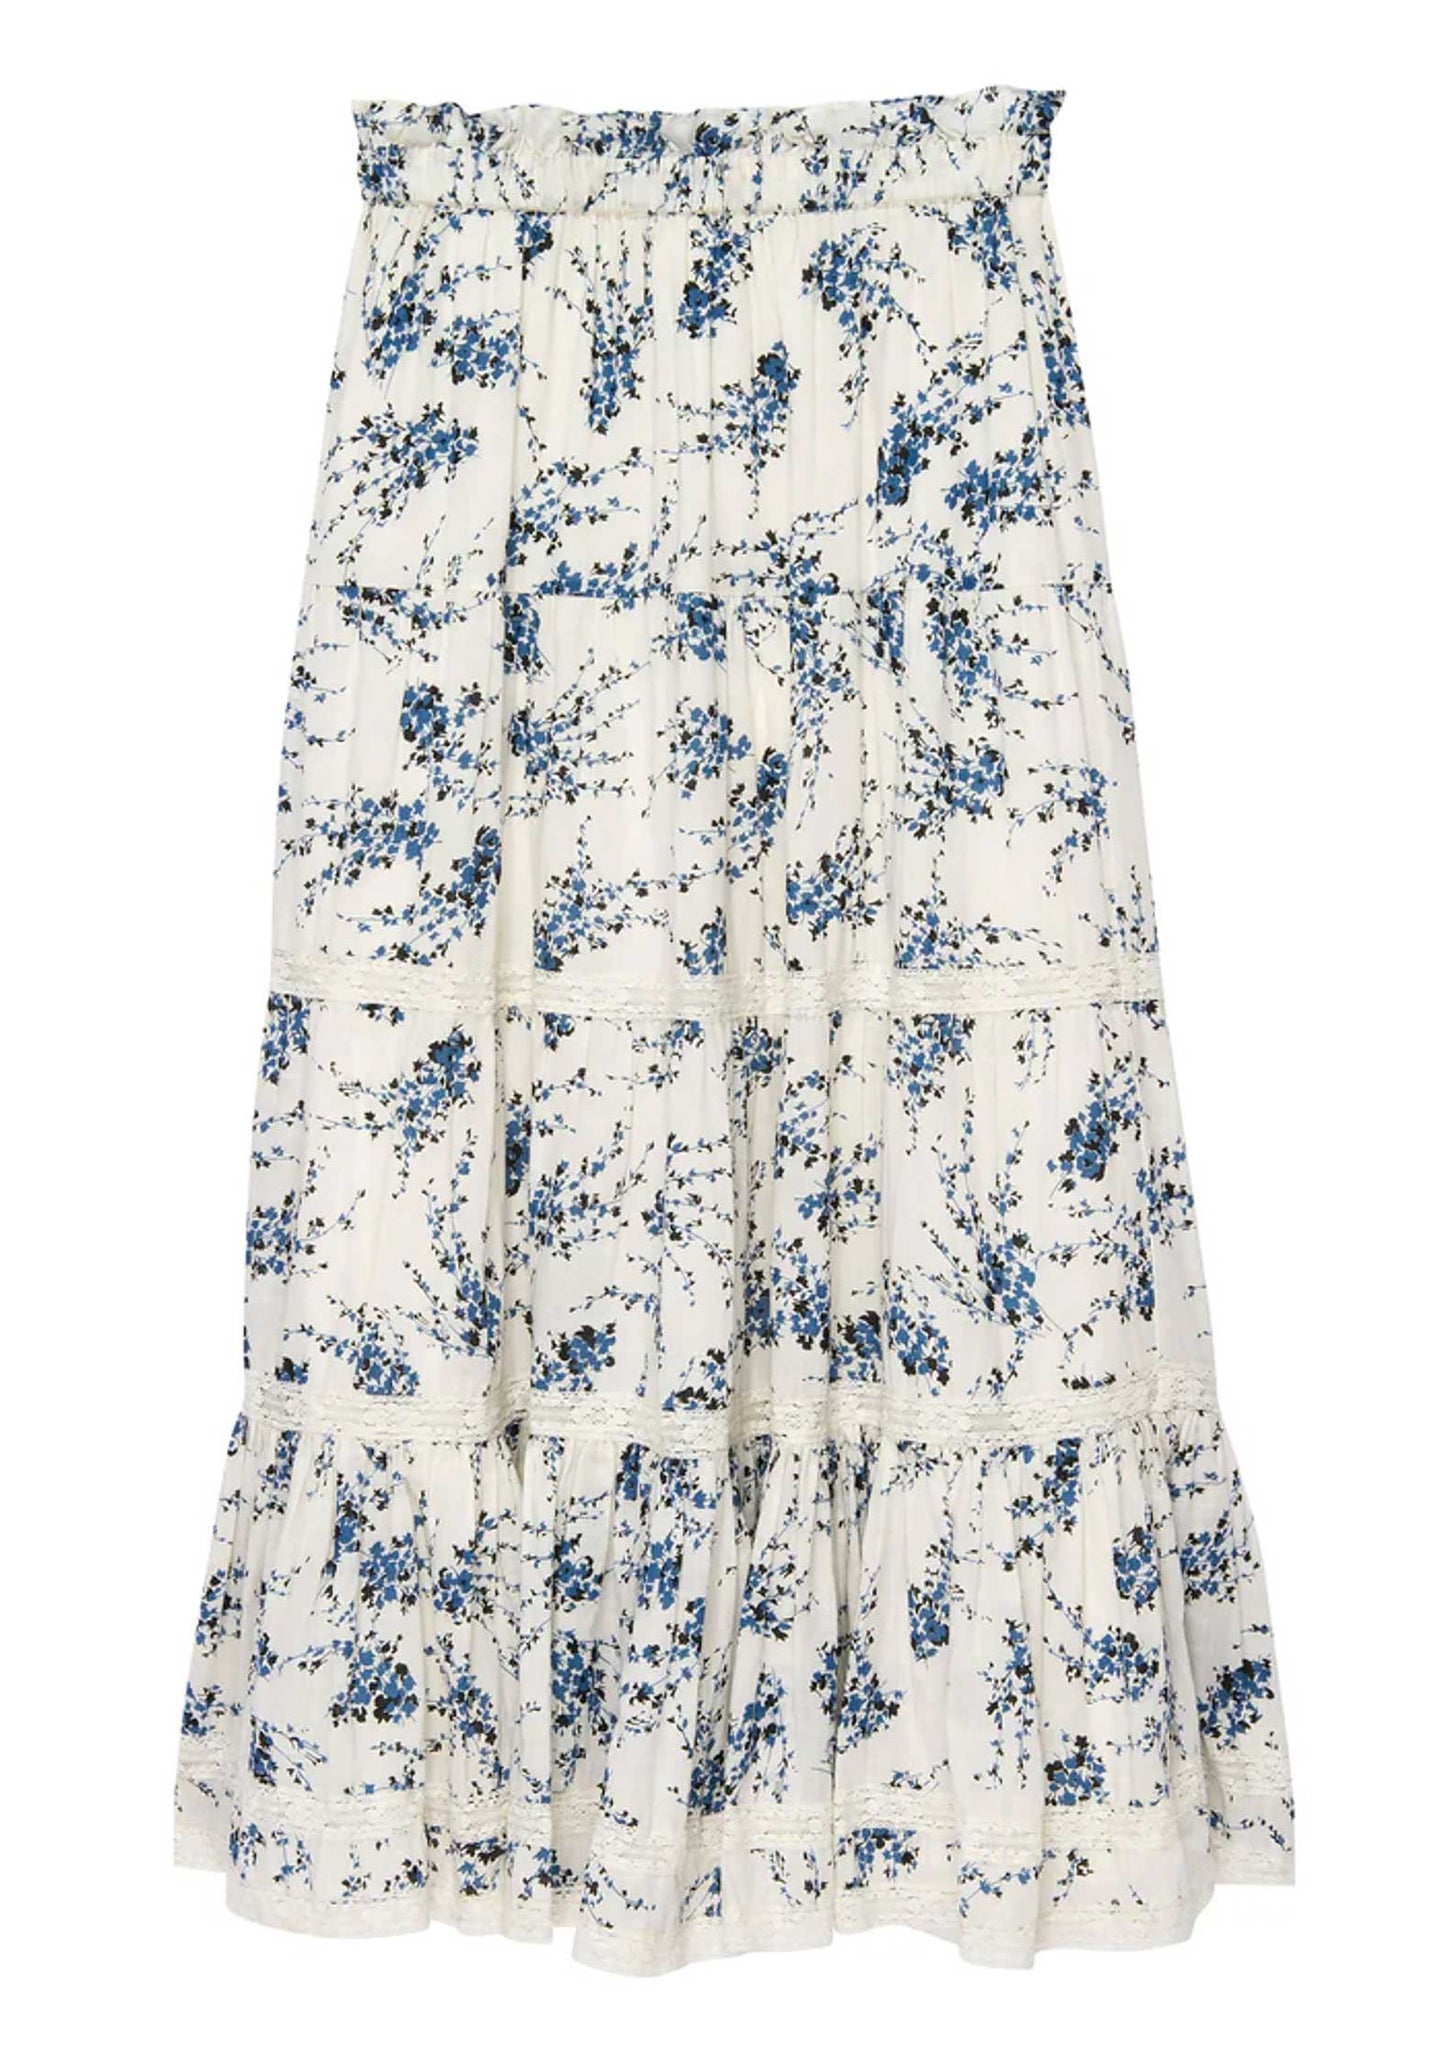 Skirt Lace Inset Floun Blue-Jasmine-Floral